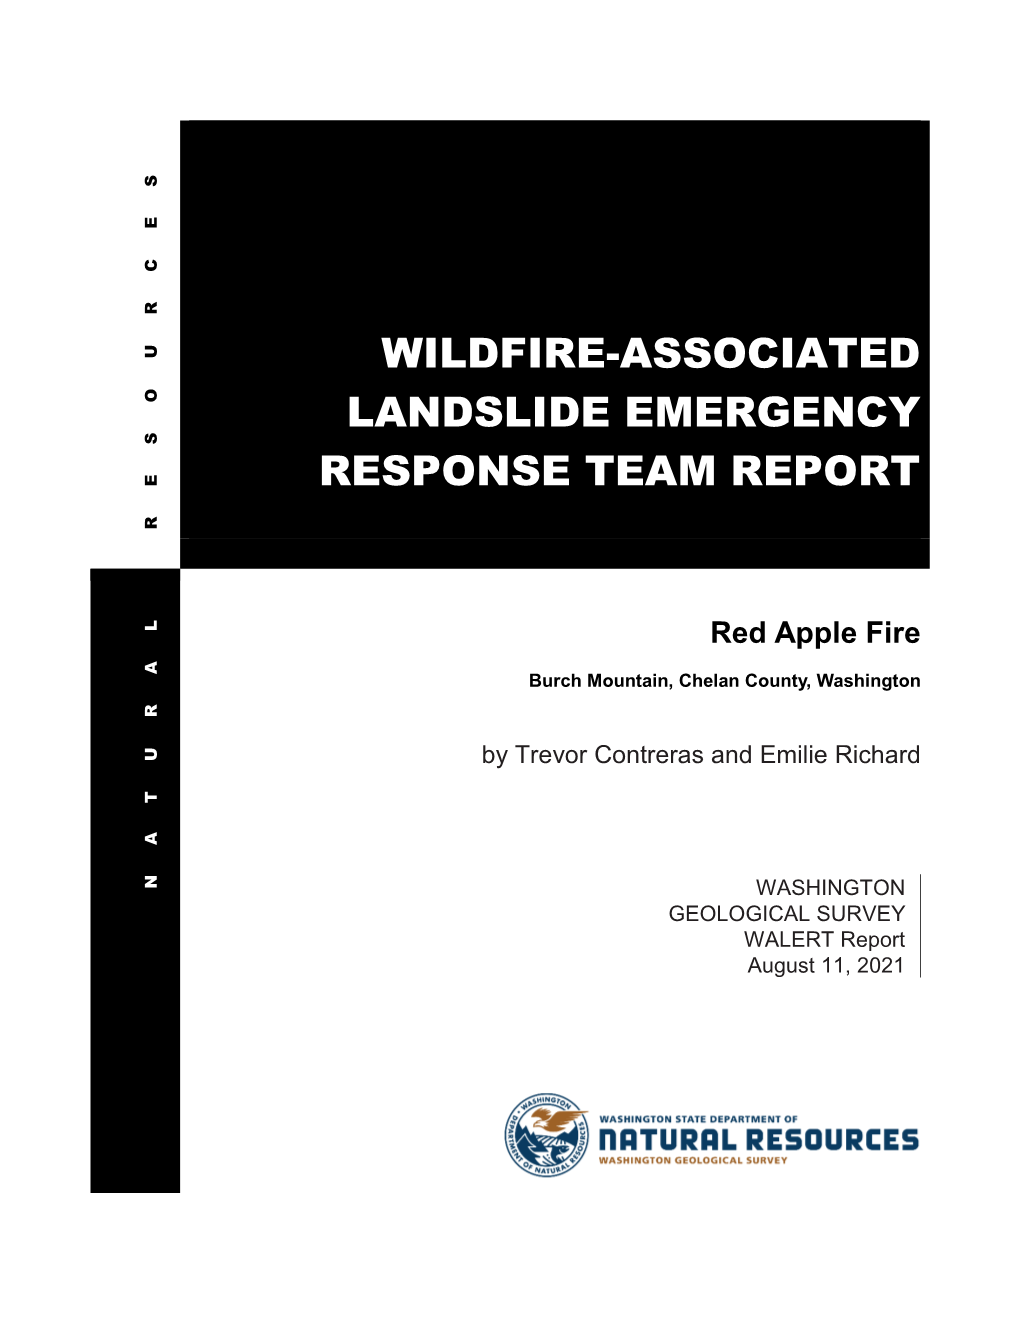 Wildfire-Associated Landslide Emergency Response Team Report